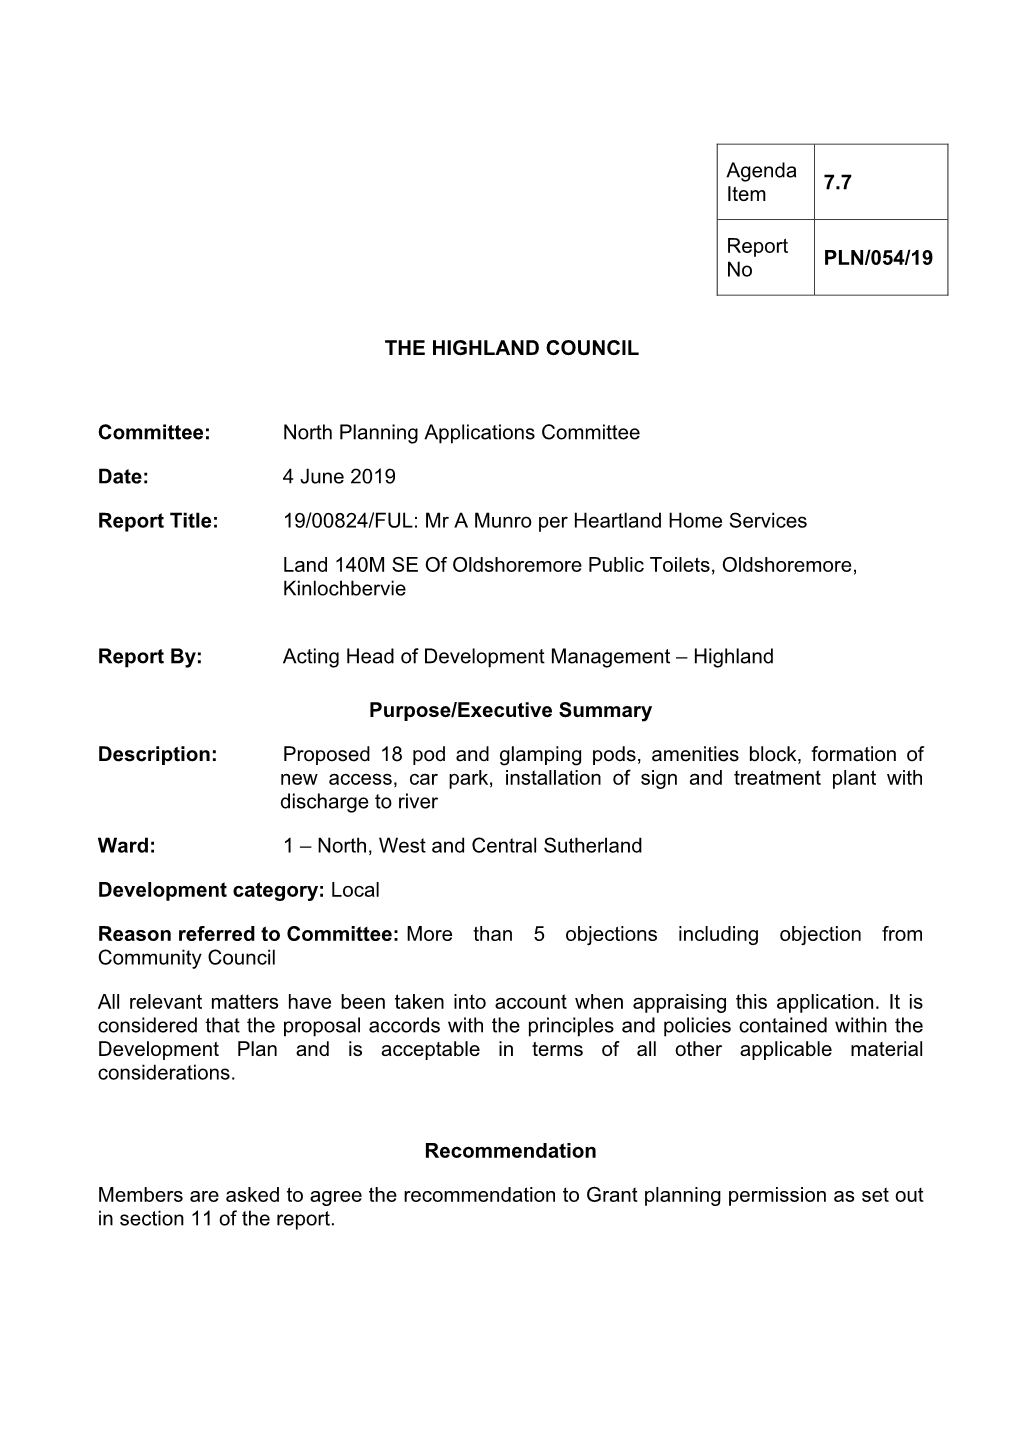 Applicant: Mr a Munro (19/00824/FUL) (PLN/054/19)